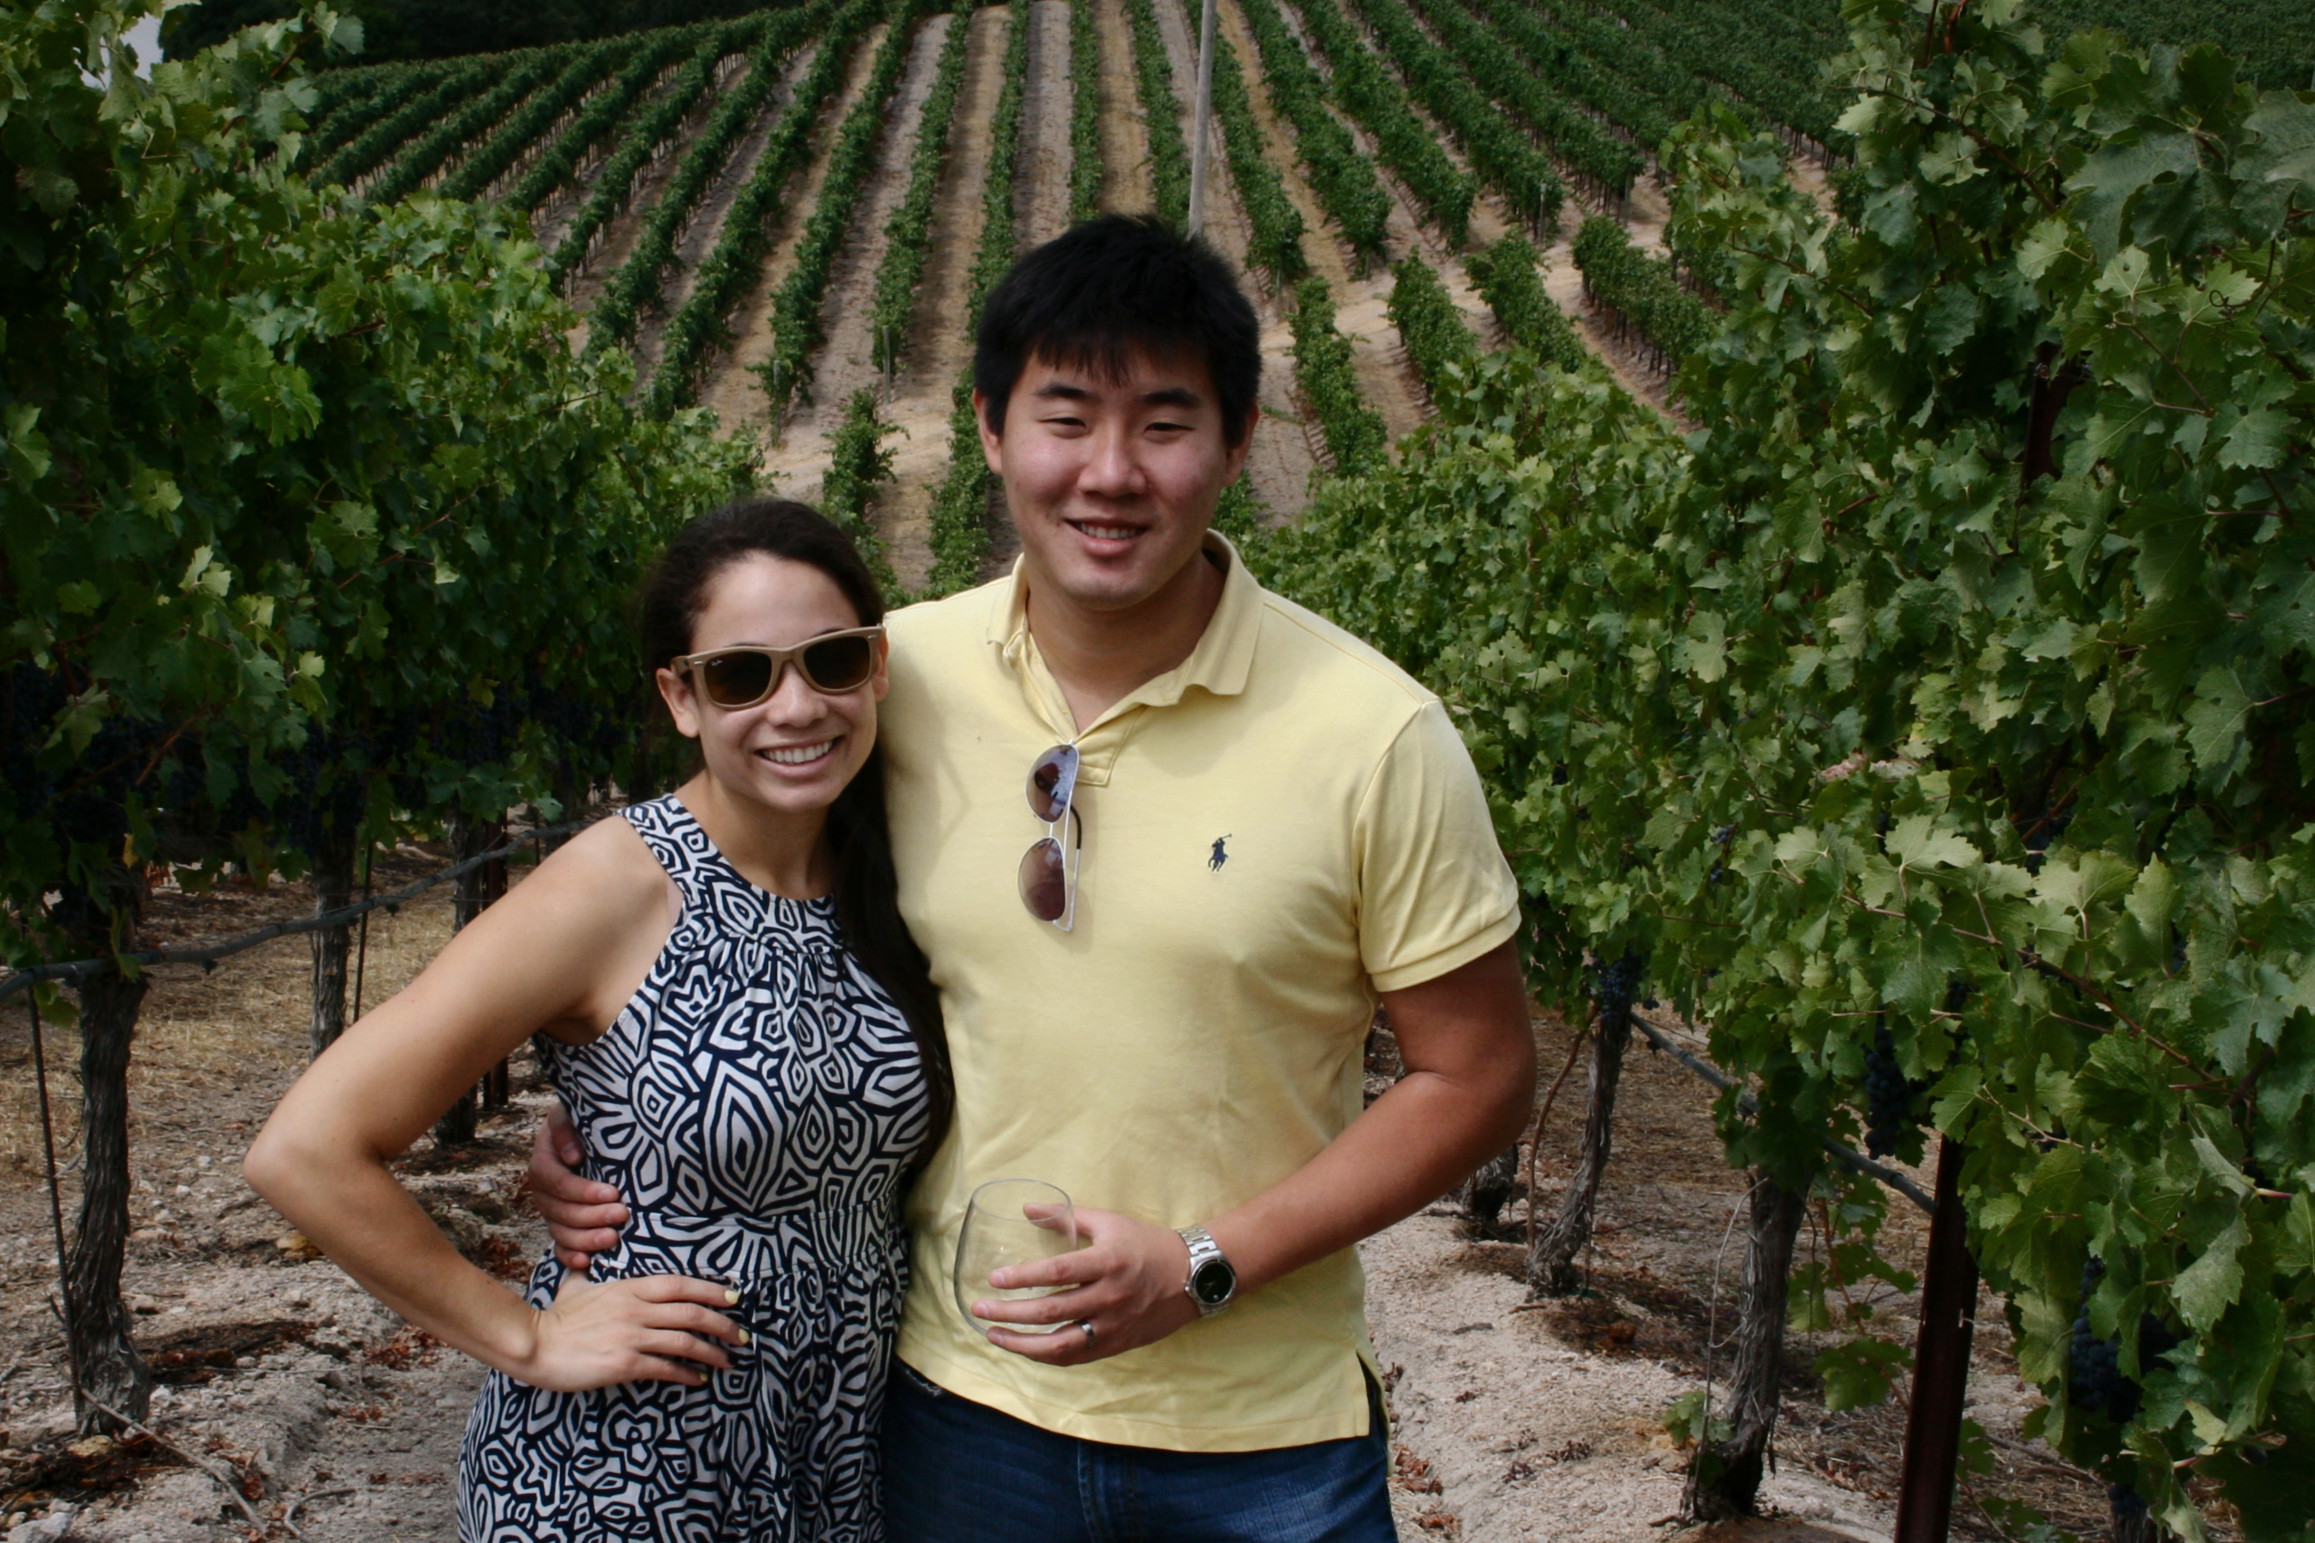 USA_California_Sonoma_Gundlach Bundschu Winery_vinyard excursion couple travel.jpg